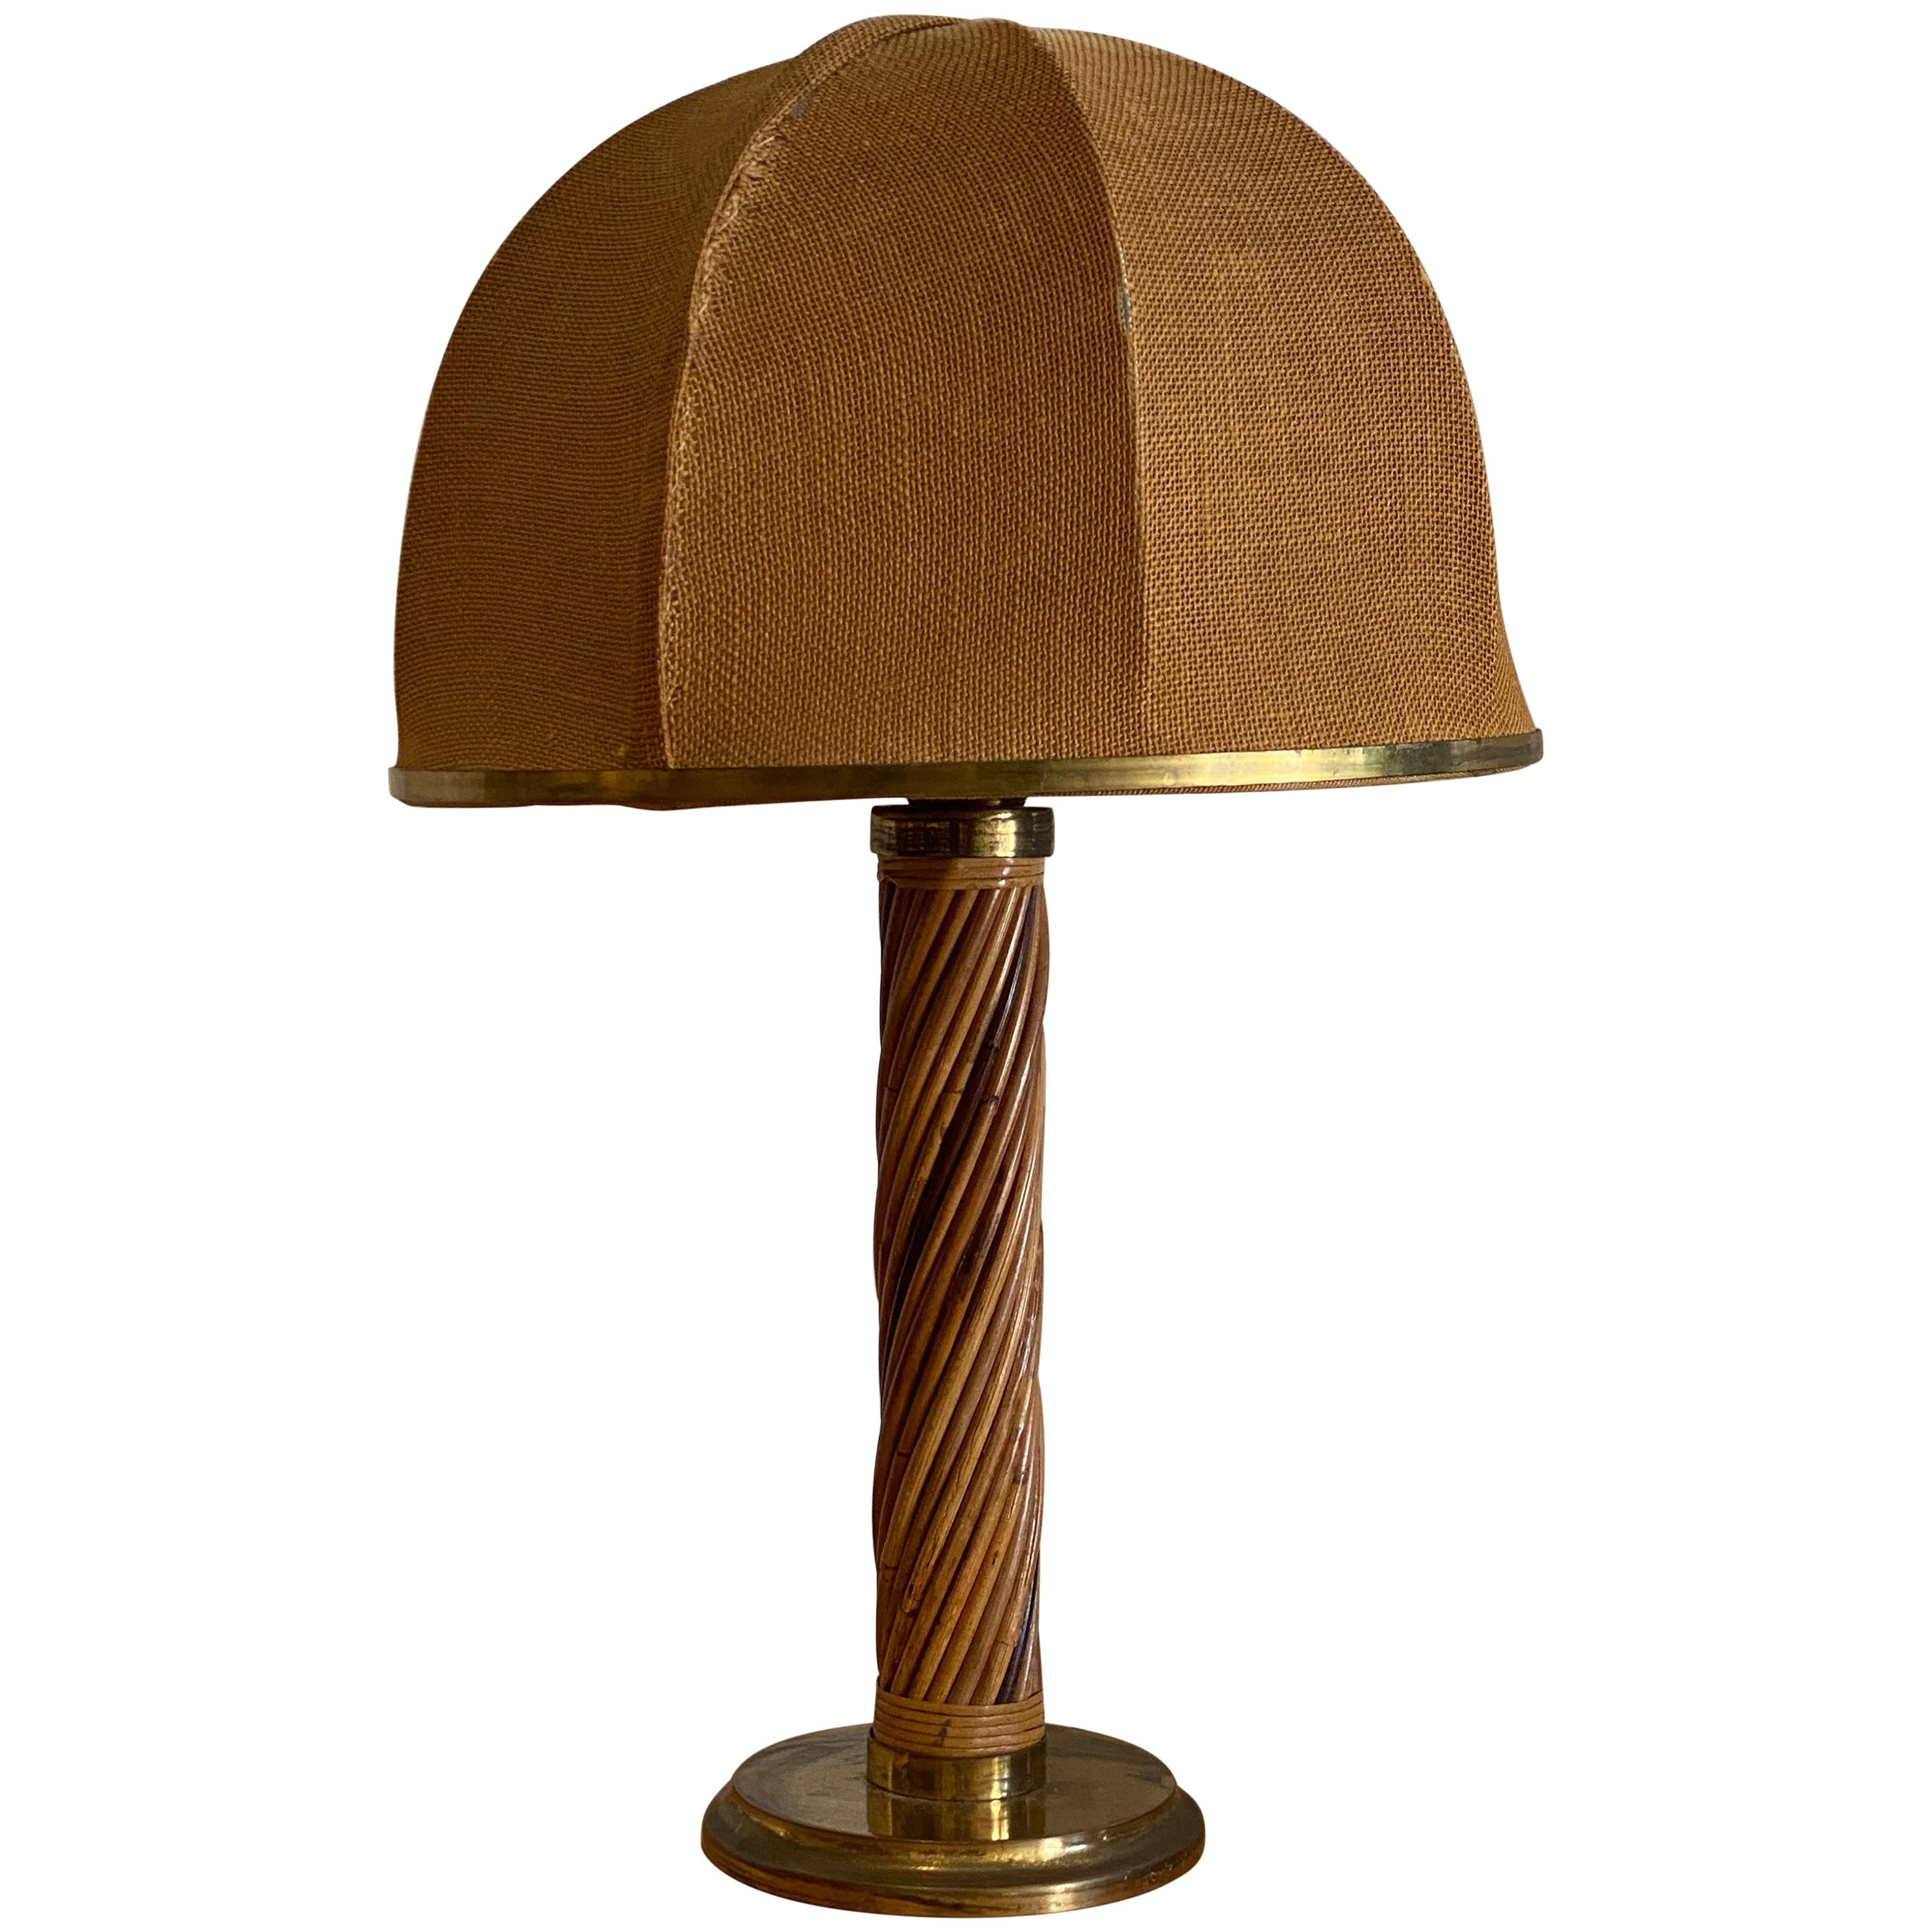 Italian, Modernist Table Lamp, Brass, Bamboo, Fabric, Italy, 1960s